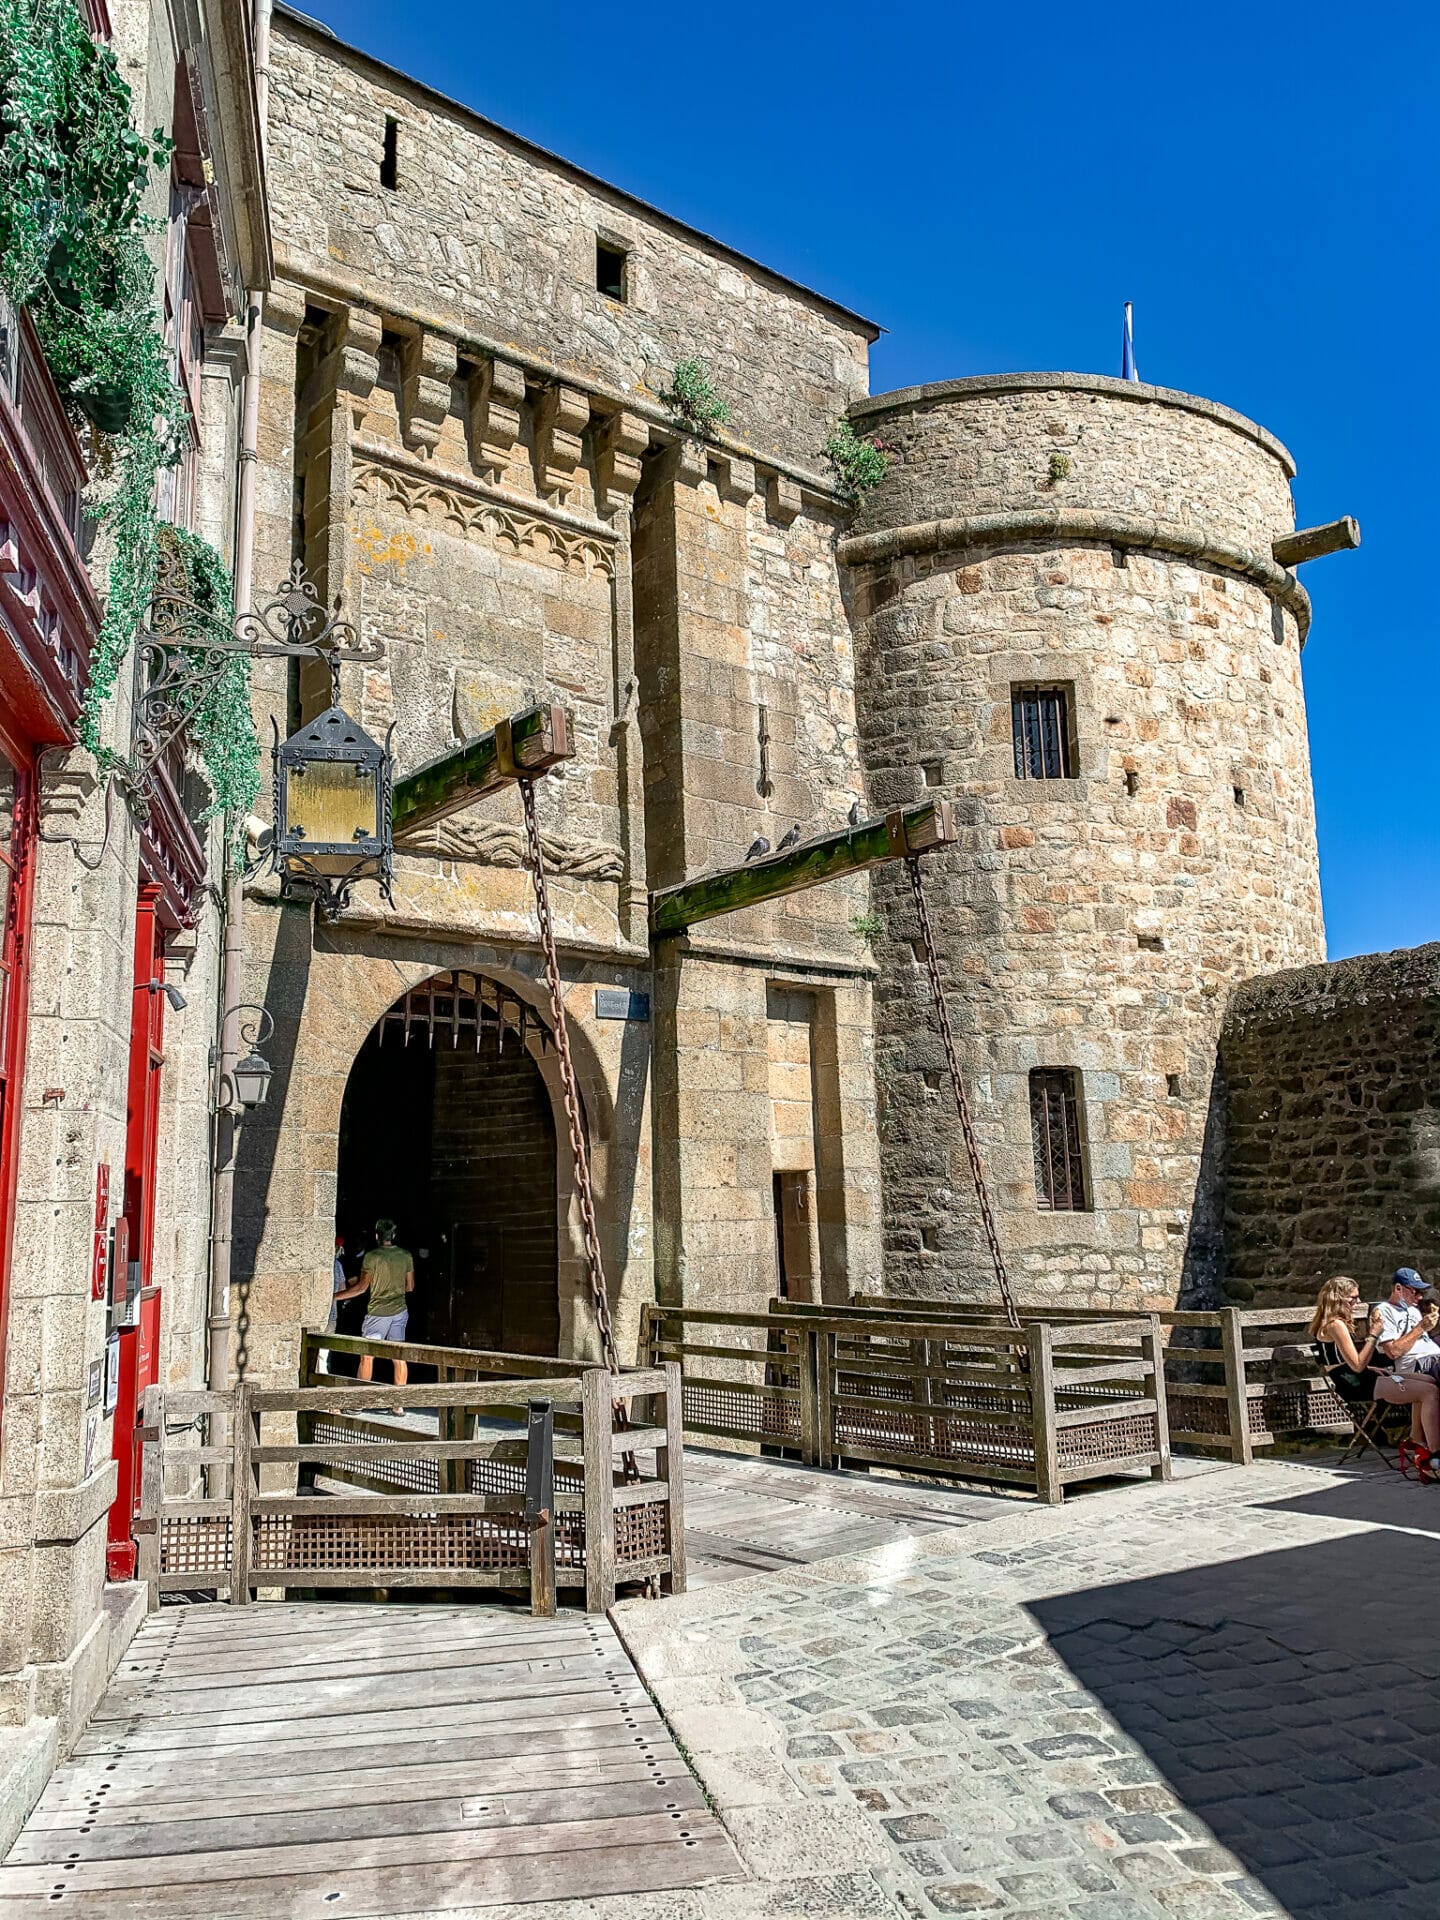 Drawbridge portal in the walls of Mont Saint Michel